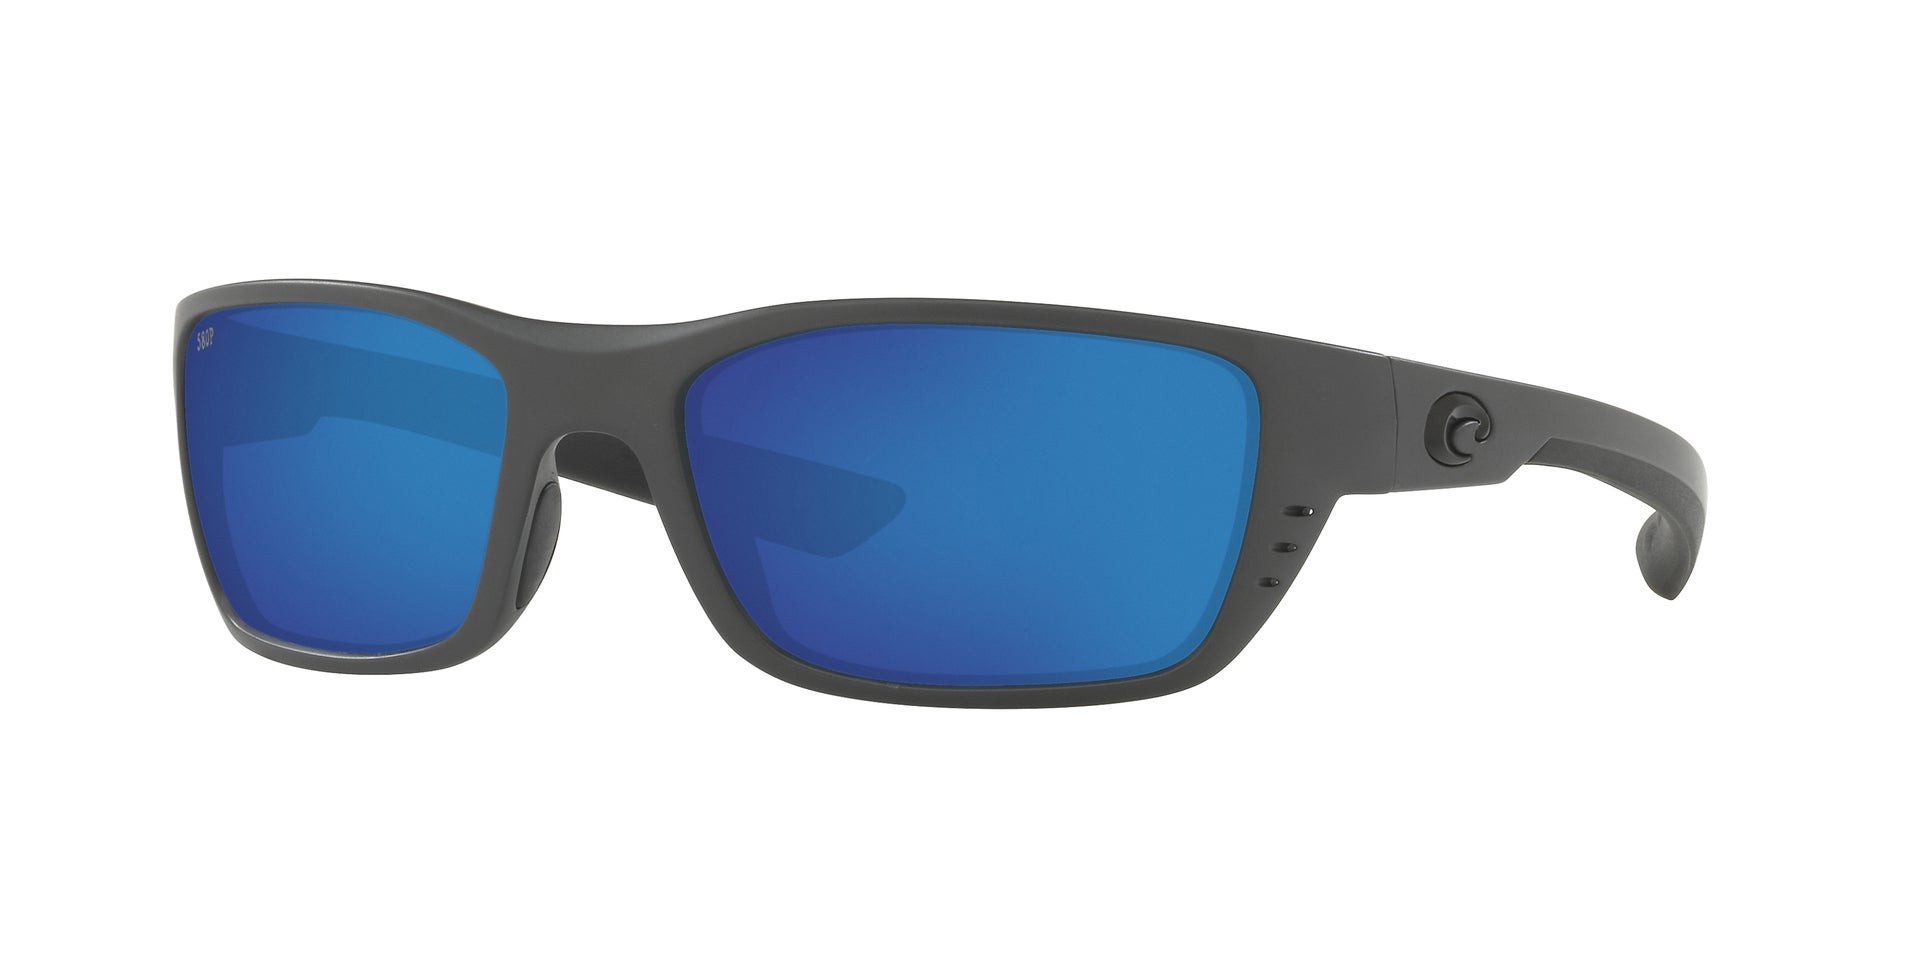 Whitetip Matte Gray Sunglasses w/ Polarized 580P Blue Mirror Lens